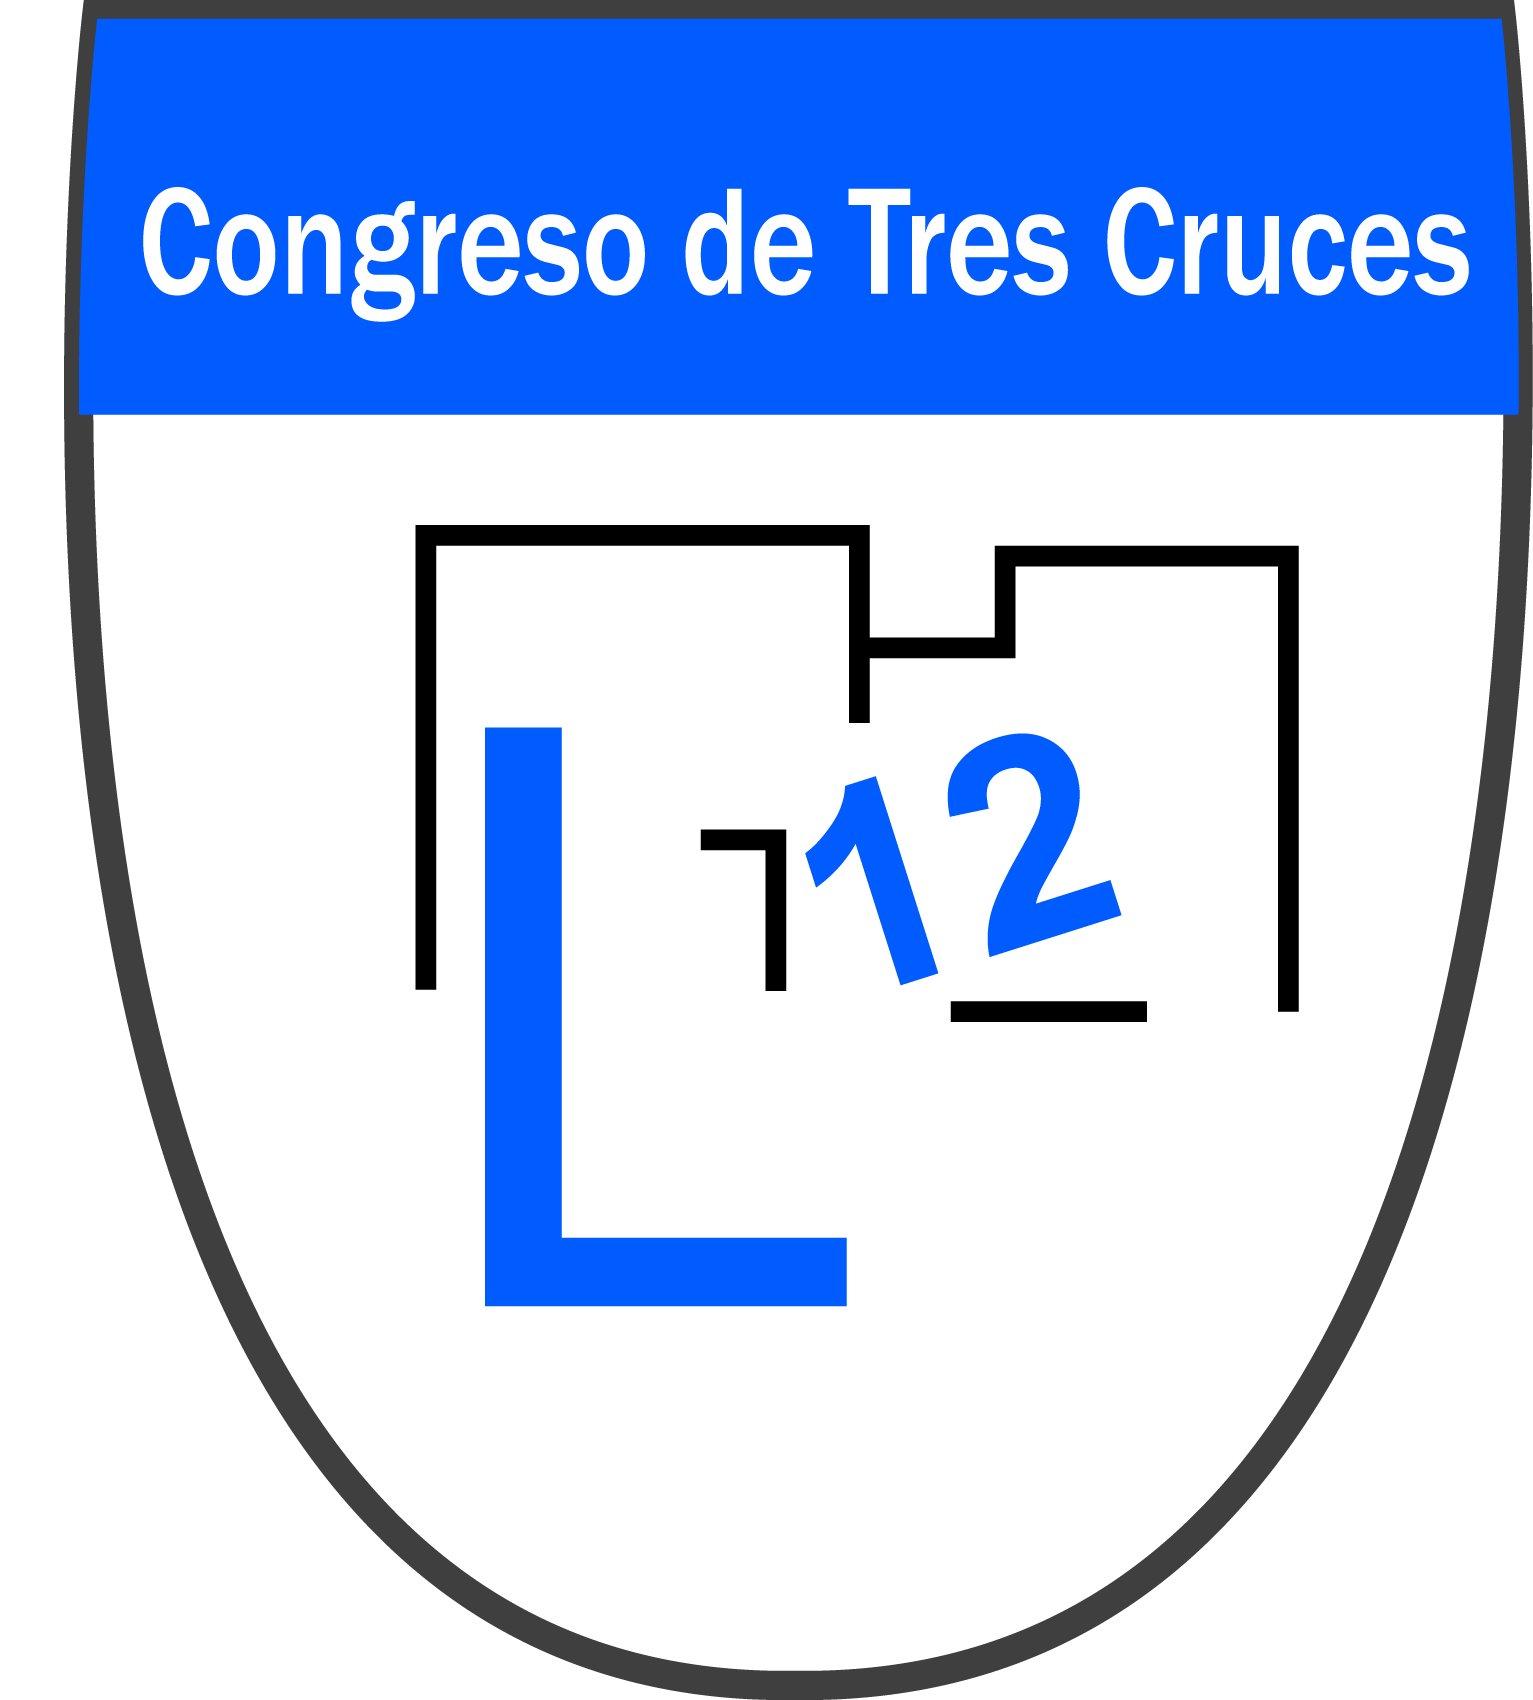 Logo liceo 12 congreso de tres cruces uruguay